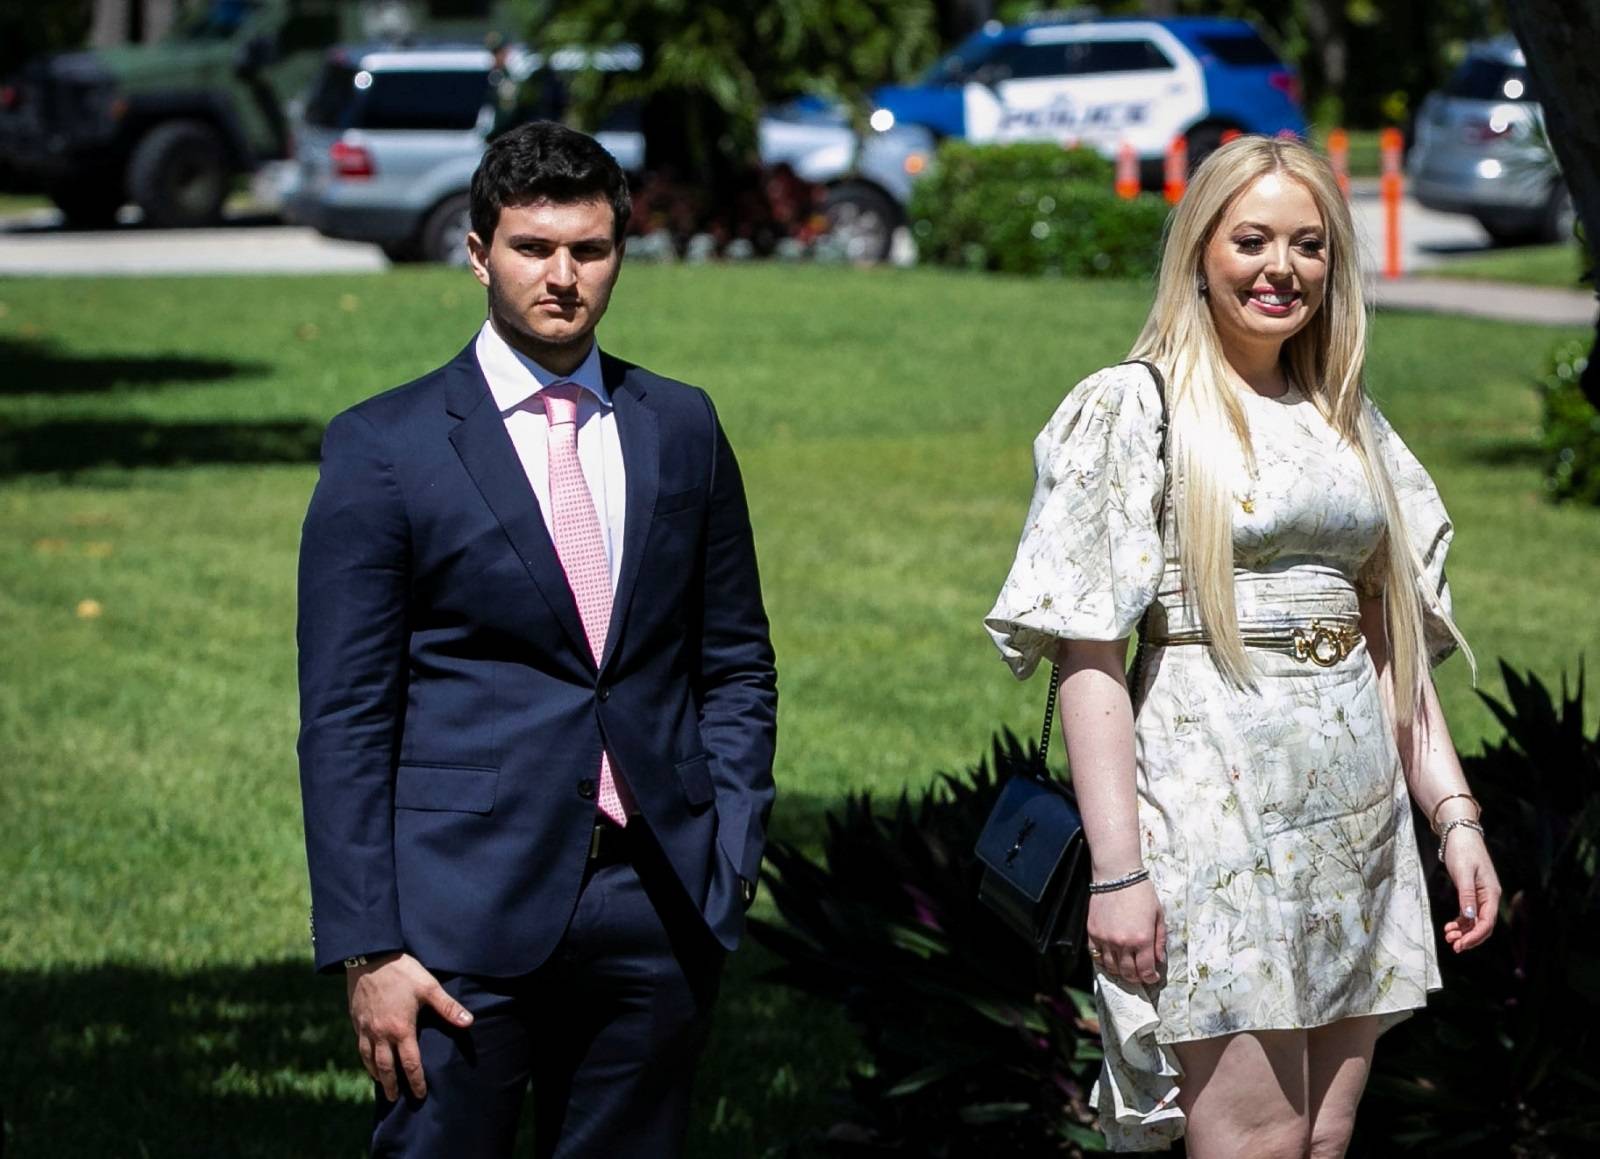 Tiffany Trump, daughter of U.S. President Donald Trump, and her boyfriend Michael Boulos